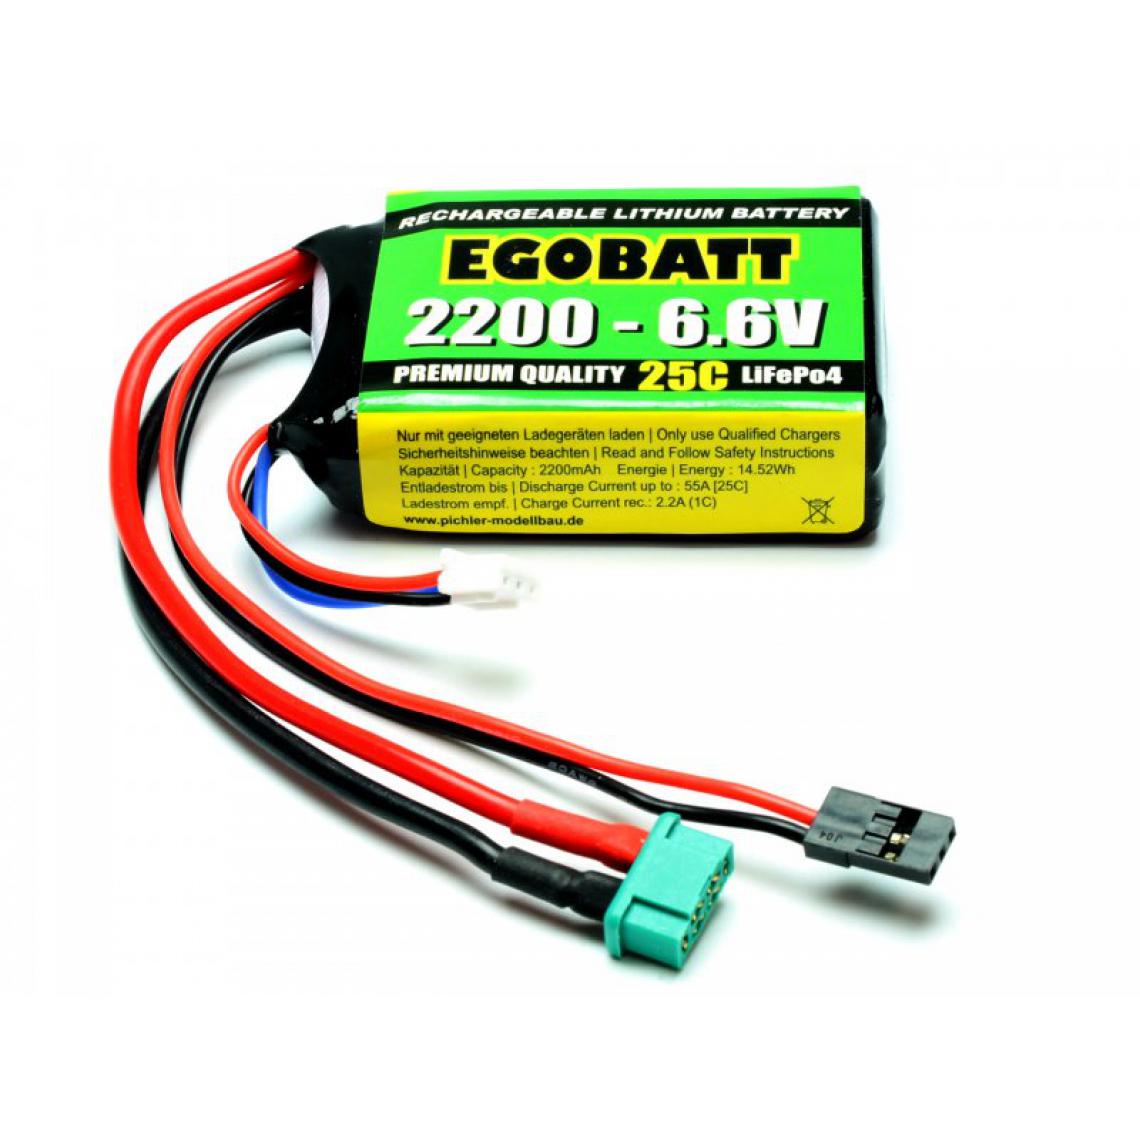 Pichler - Accu LiFe EGOBATT 2200mah - 6.6V (25C) - JR/MPX - Batteries et chargeurs